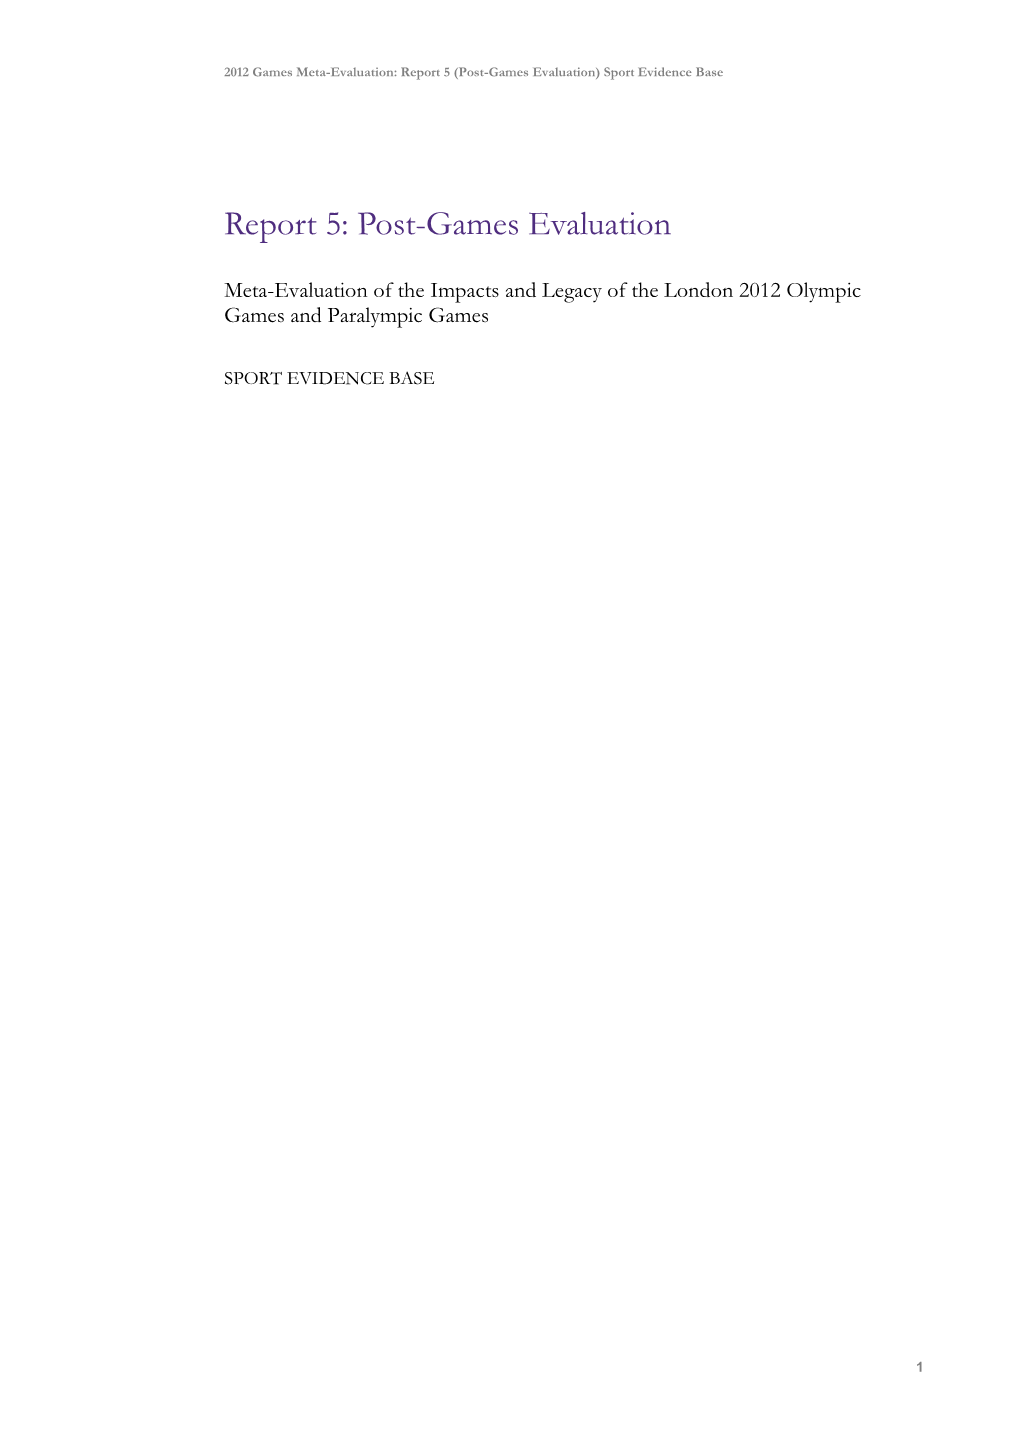 Report 5 (Post-Games Evaluation) Sport Evidence Base